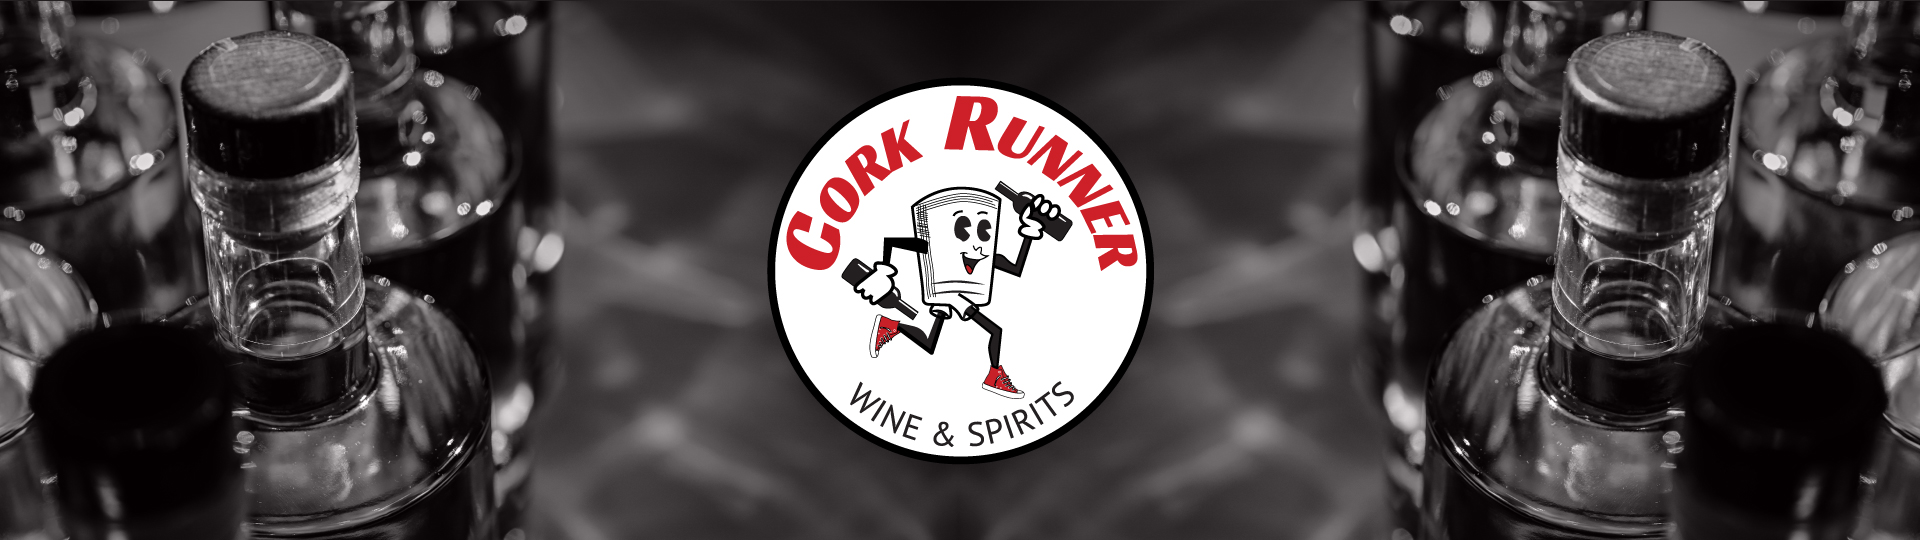 Cork Runner Wine & Spirits